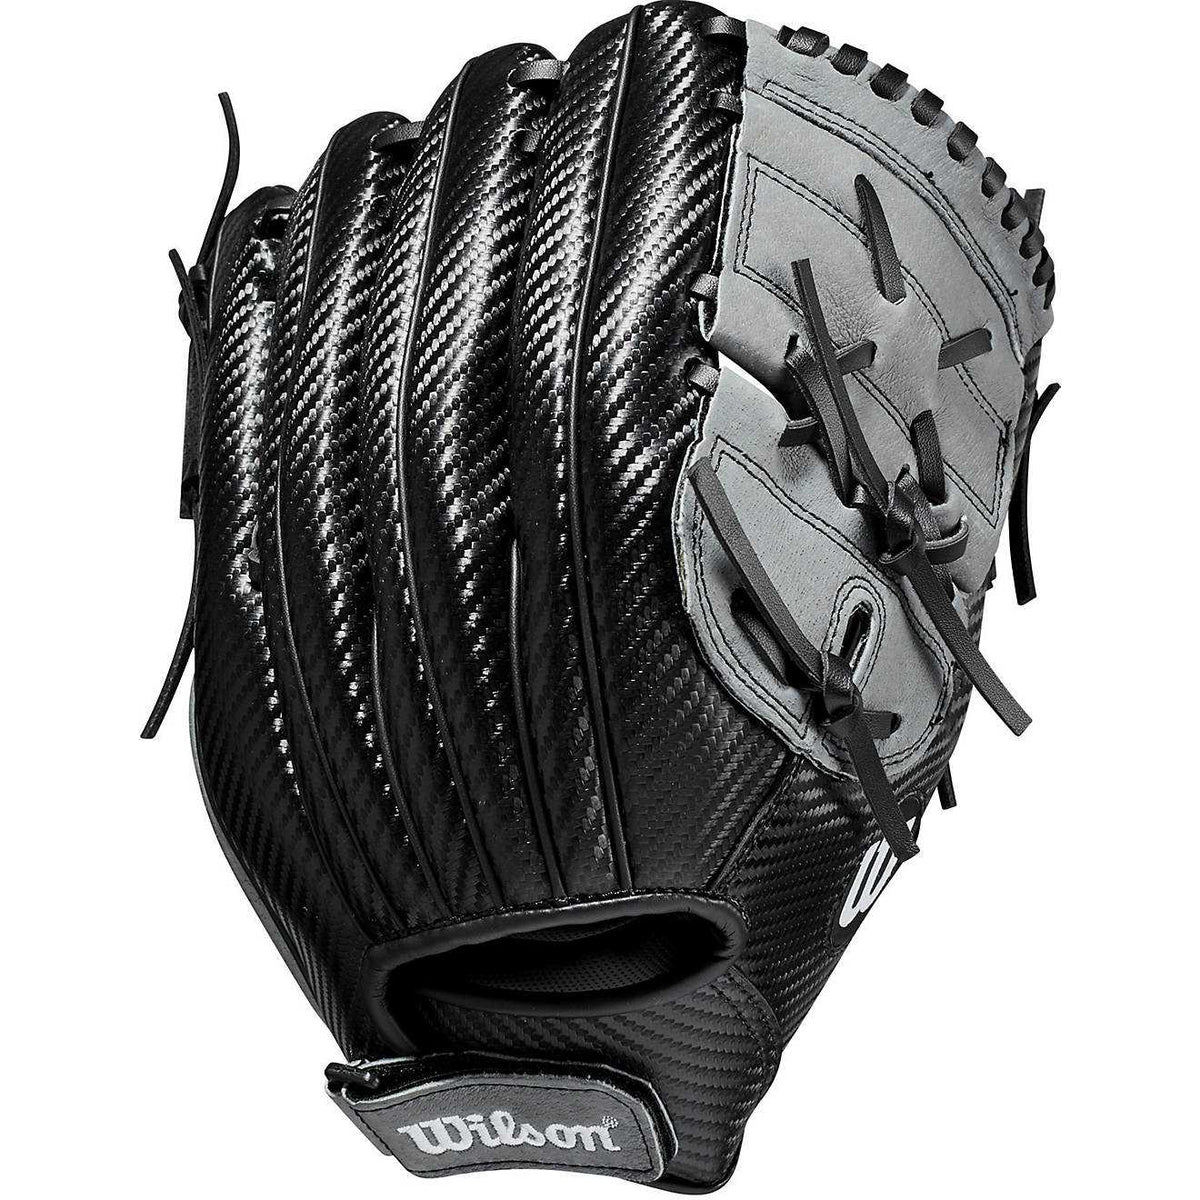 Wilson A360 12.00&quot; Utility Baseball Glove - Black Gray - HIT A Double